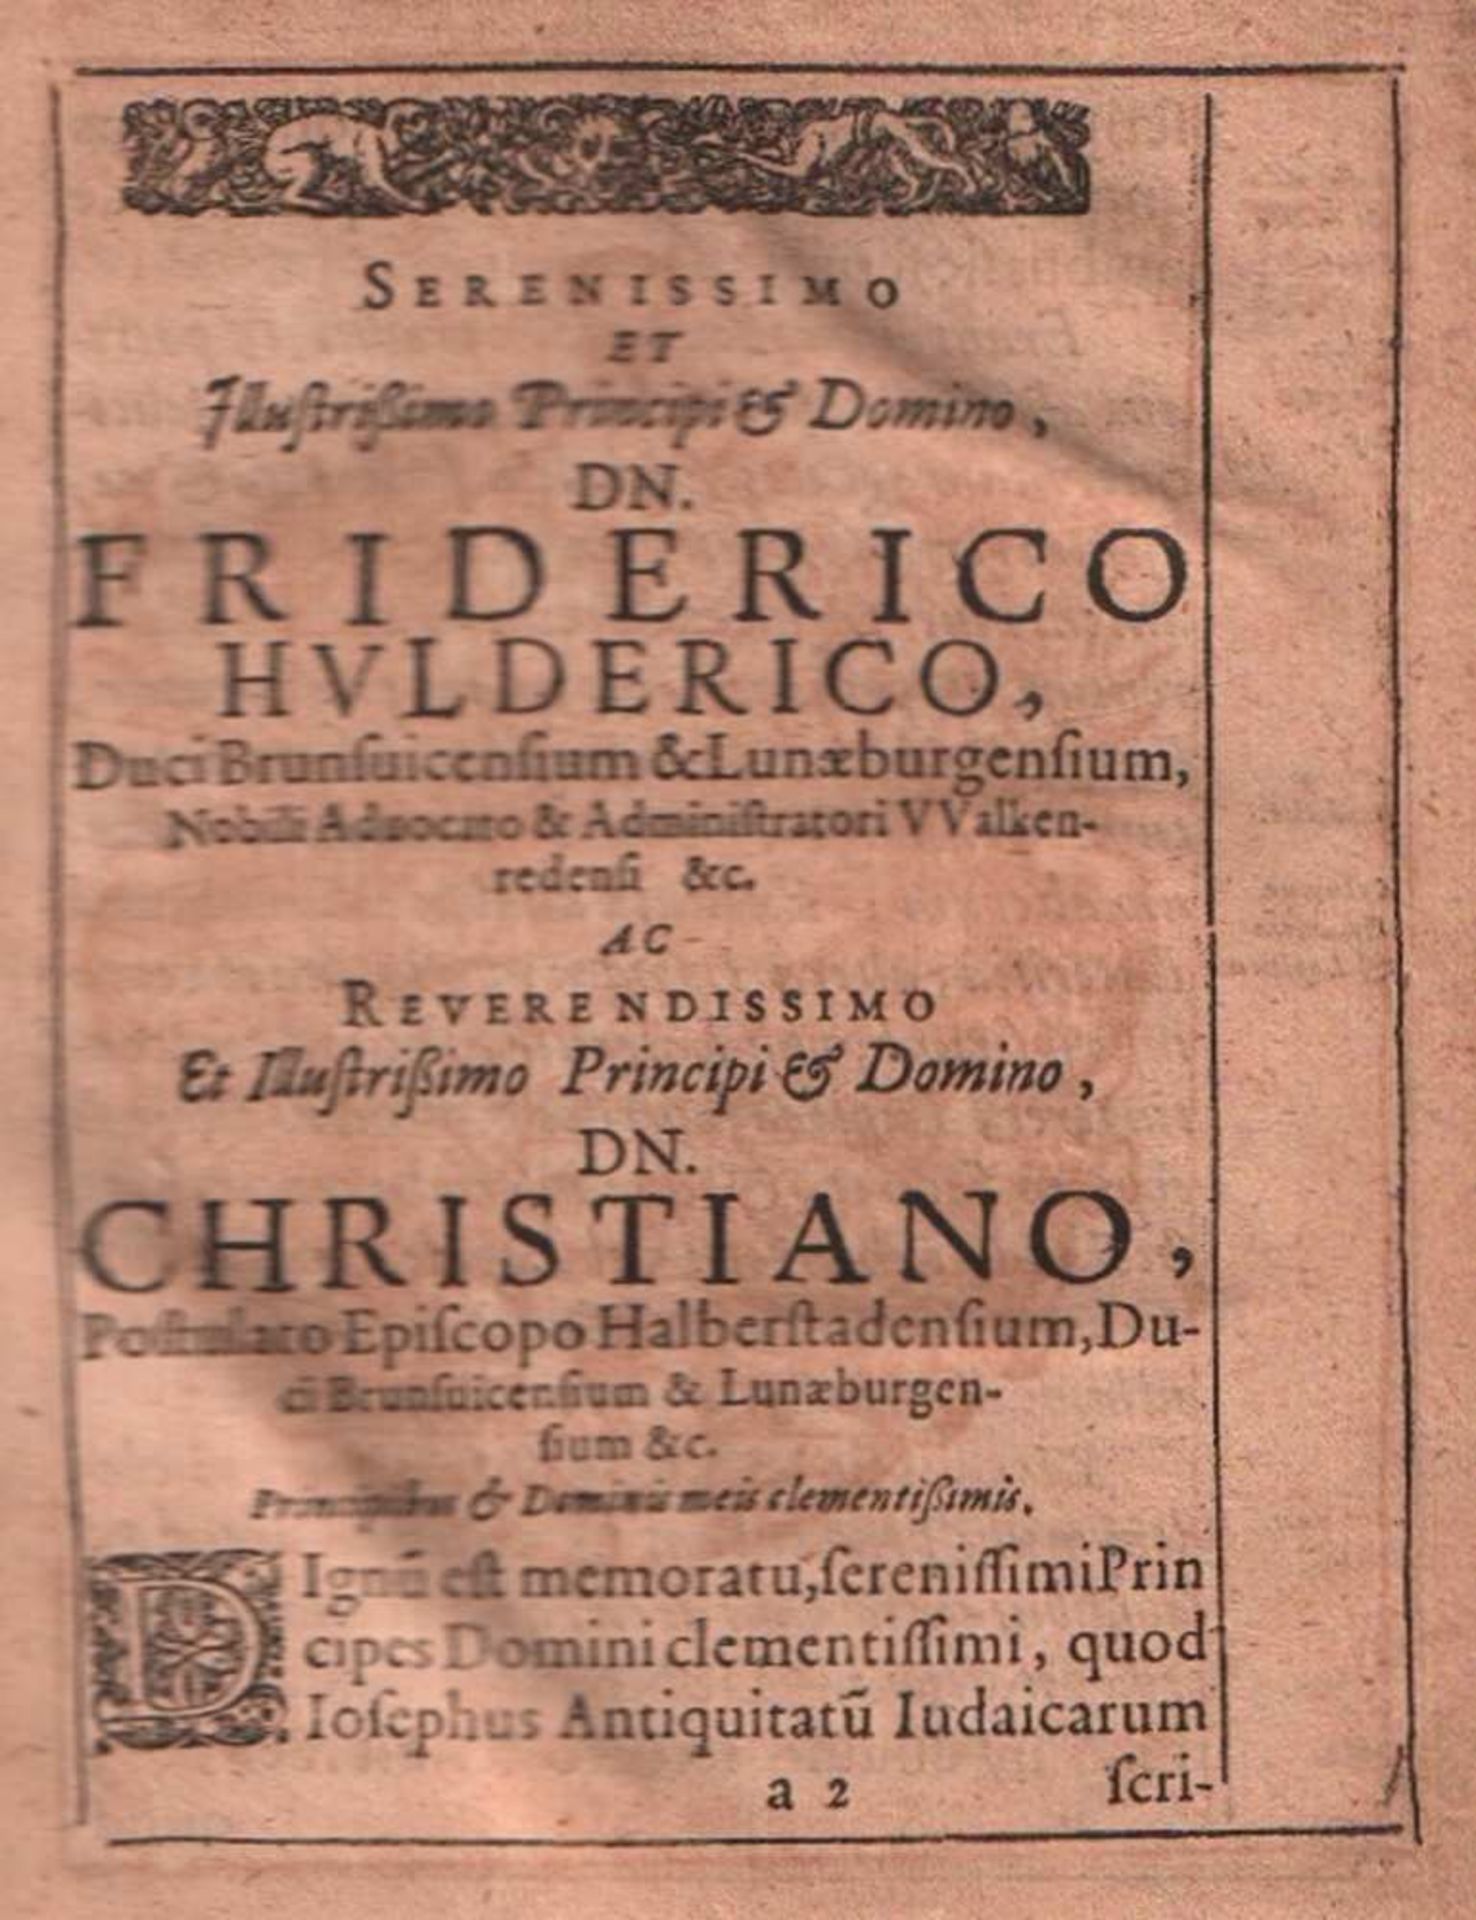 Walkenried. Eckstorm, Heinrich. Chronicon Walkenredense, sive catalogus abbatum, qui ab anno Christi